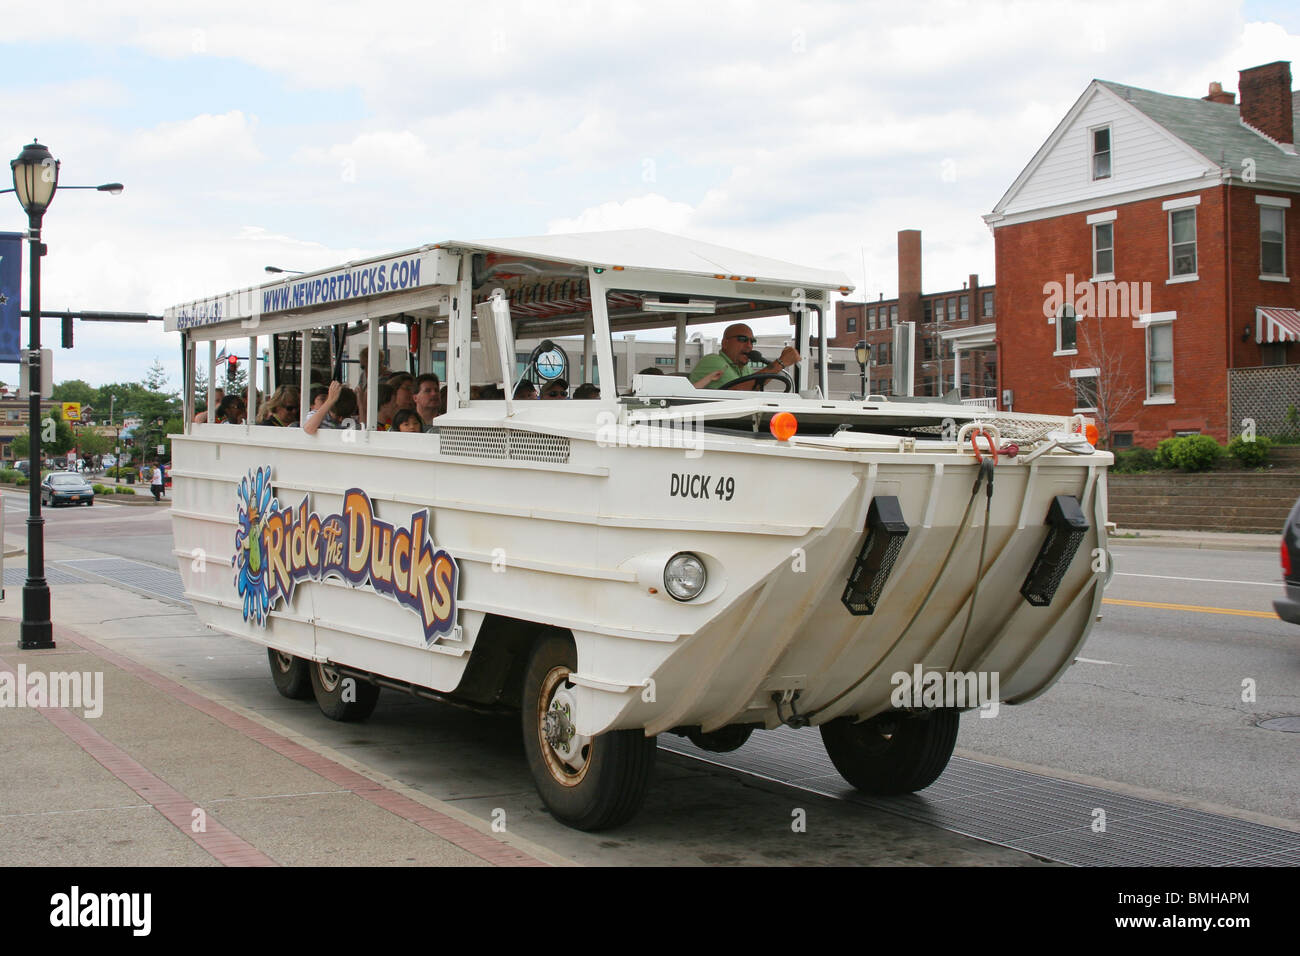 Ride The Ducks. Amphibious vehicle for city land and water tours. Newport Kentucky, Cincinnati, Ohio. Stock Photo